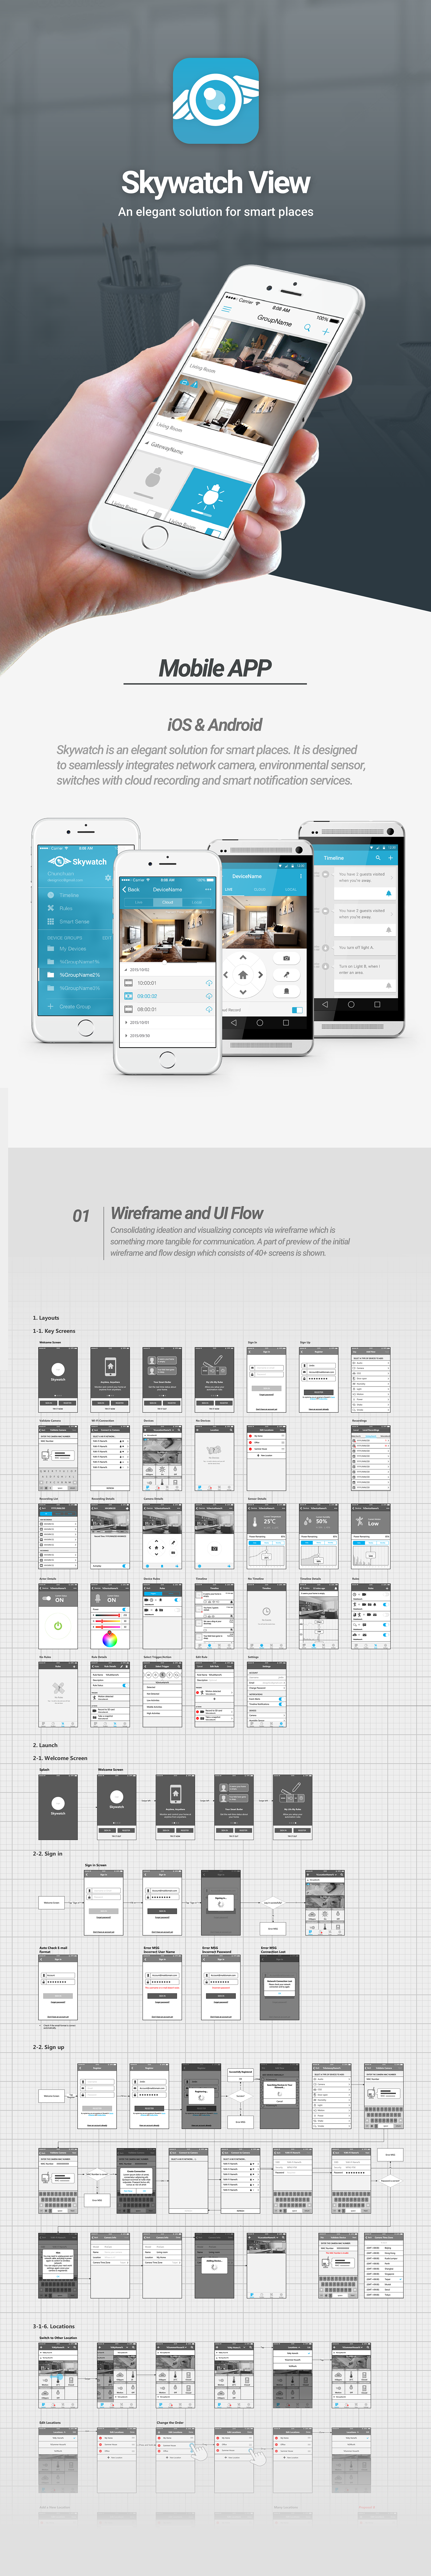 material design Mobile app web app iOS App Android App user interface ui design